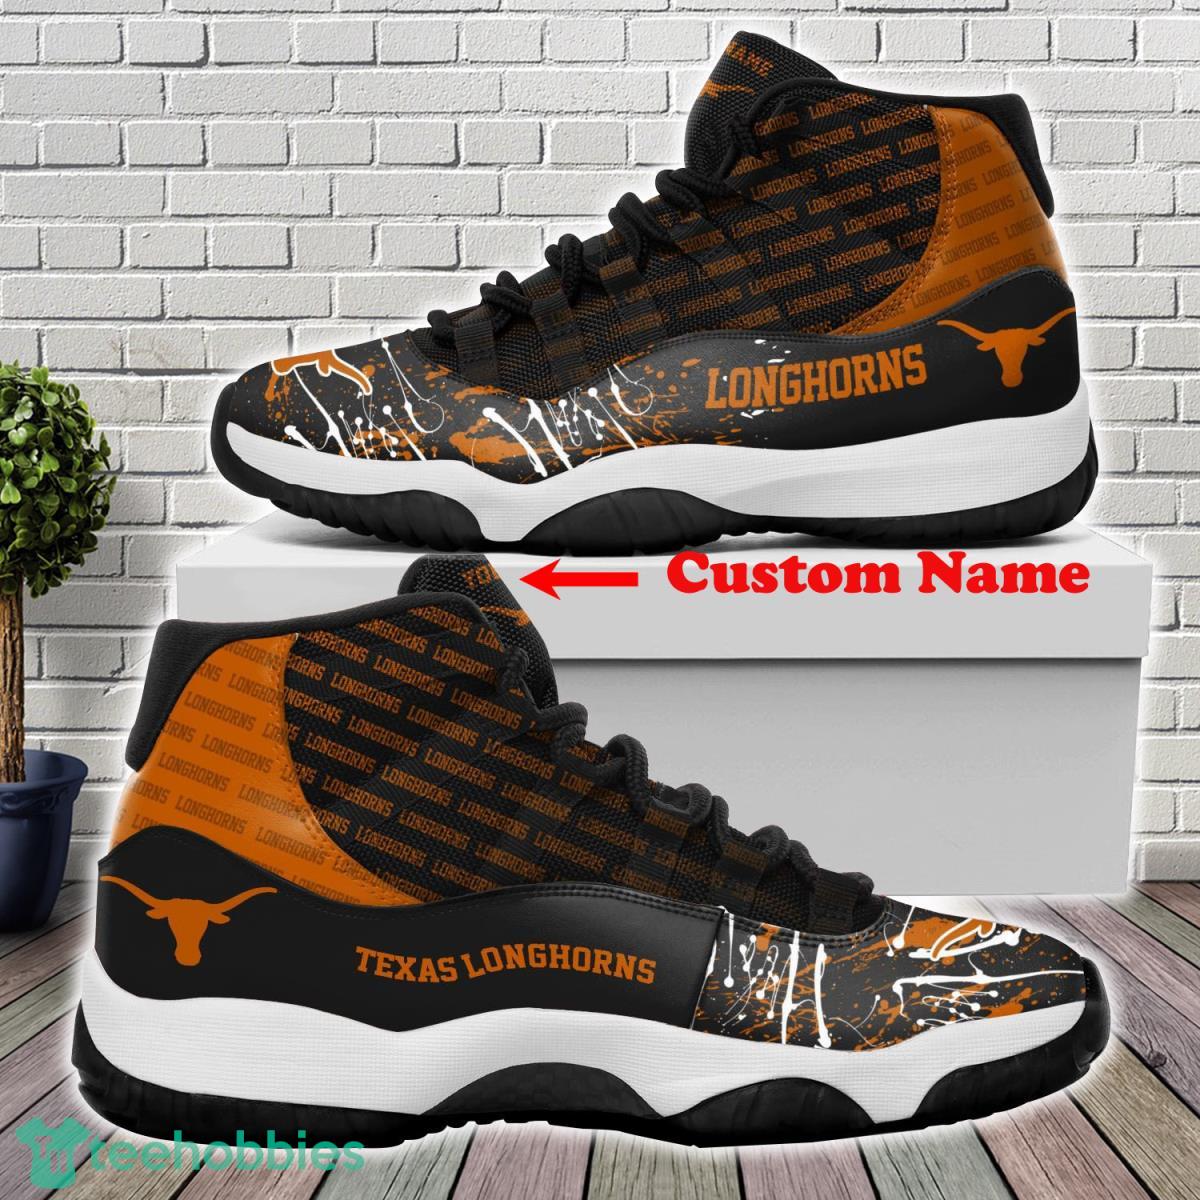 Texas Longhorns Custom Name Air Jordan 11 Sneakers For Fans Product Photo 1